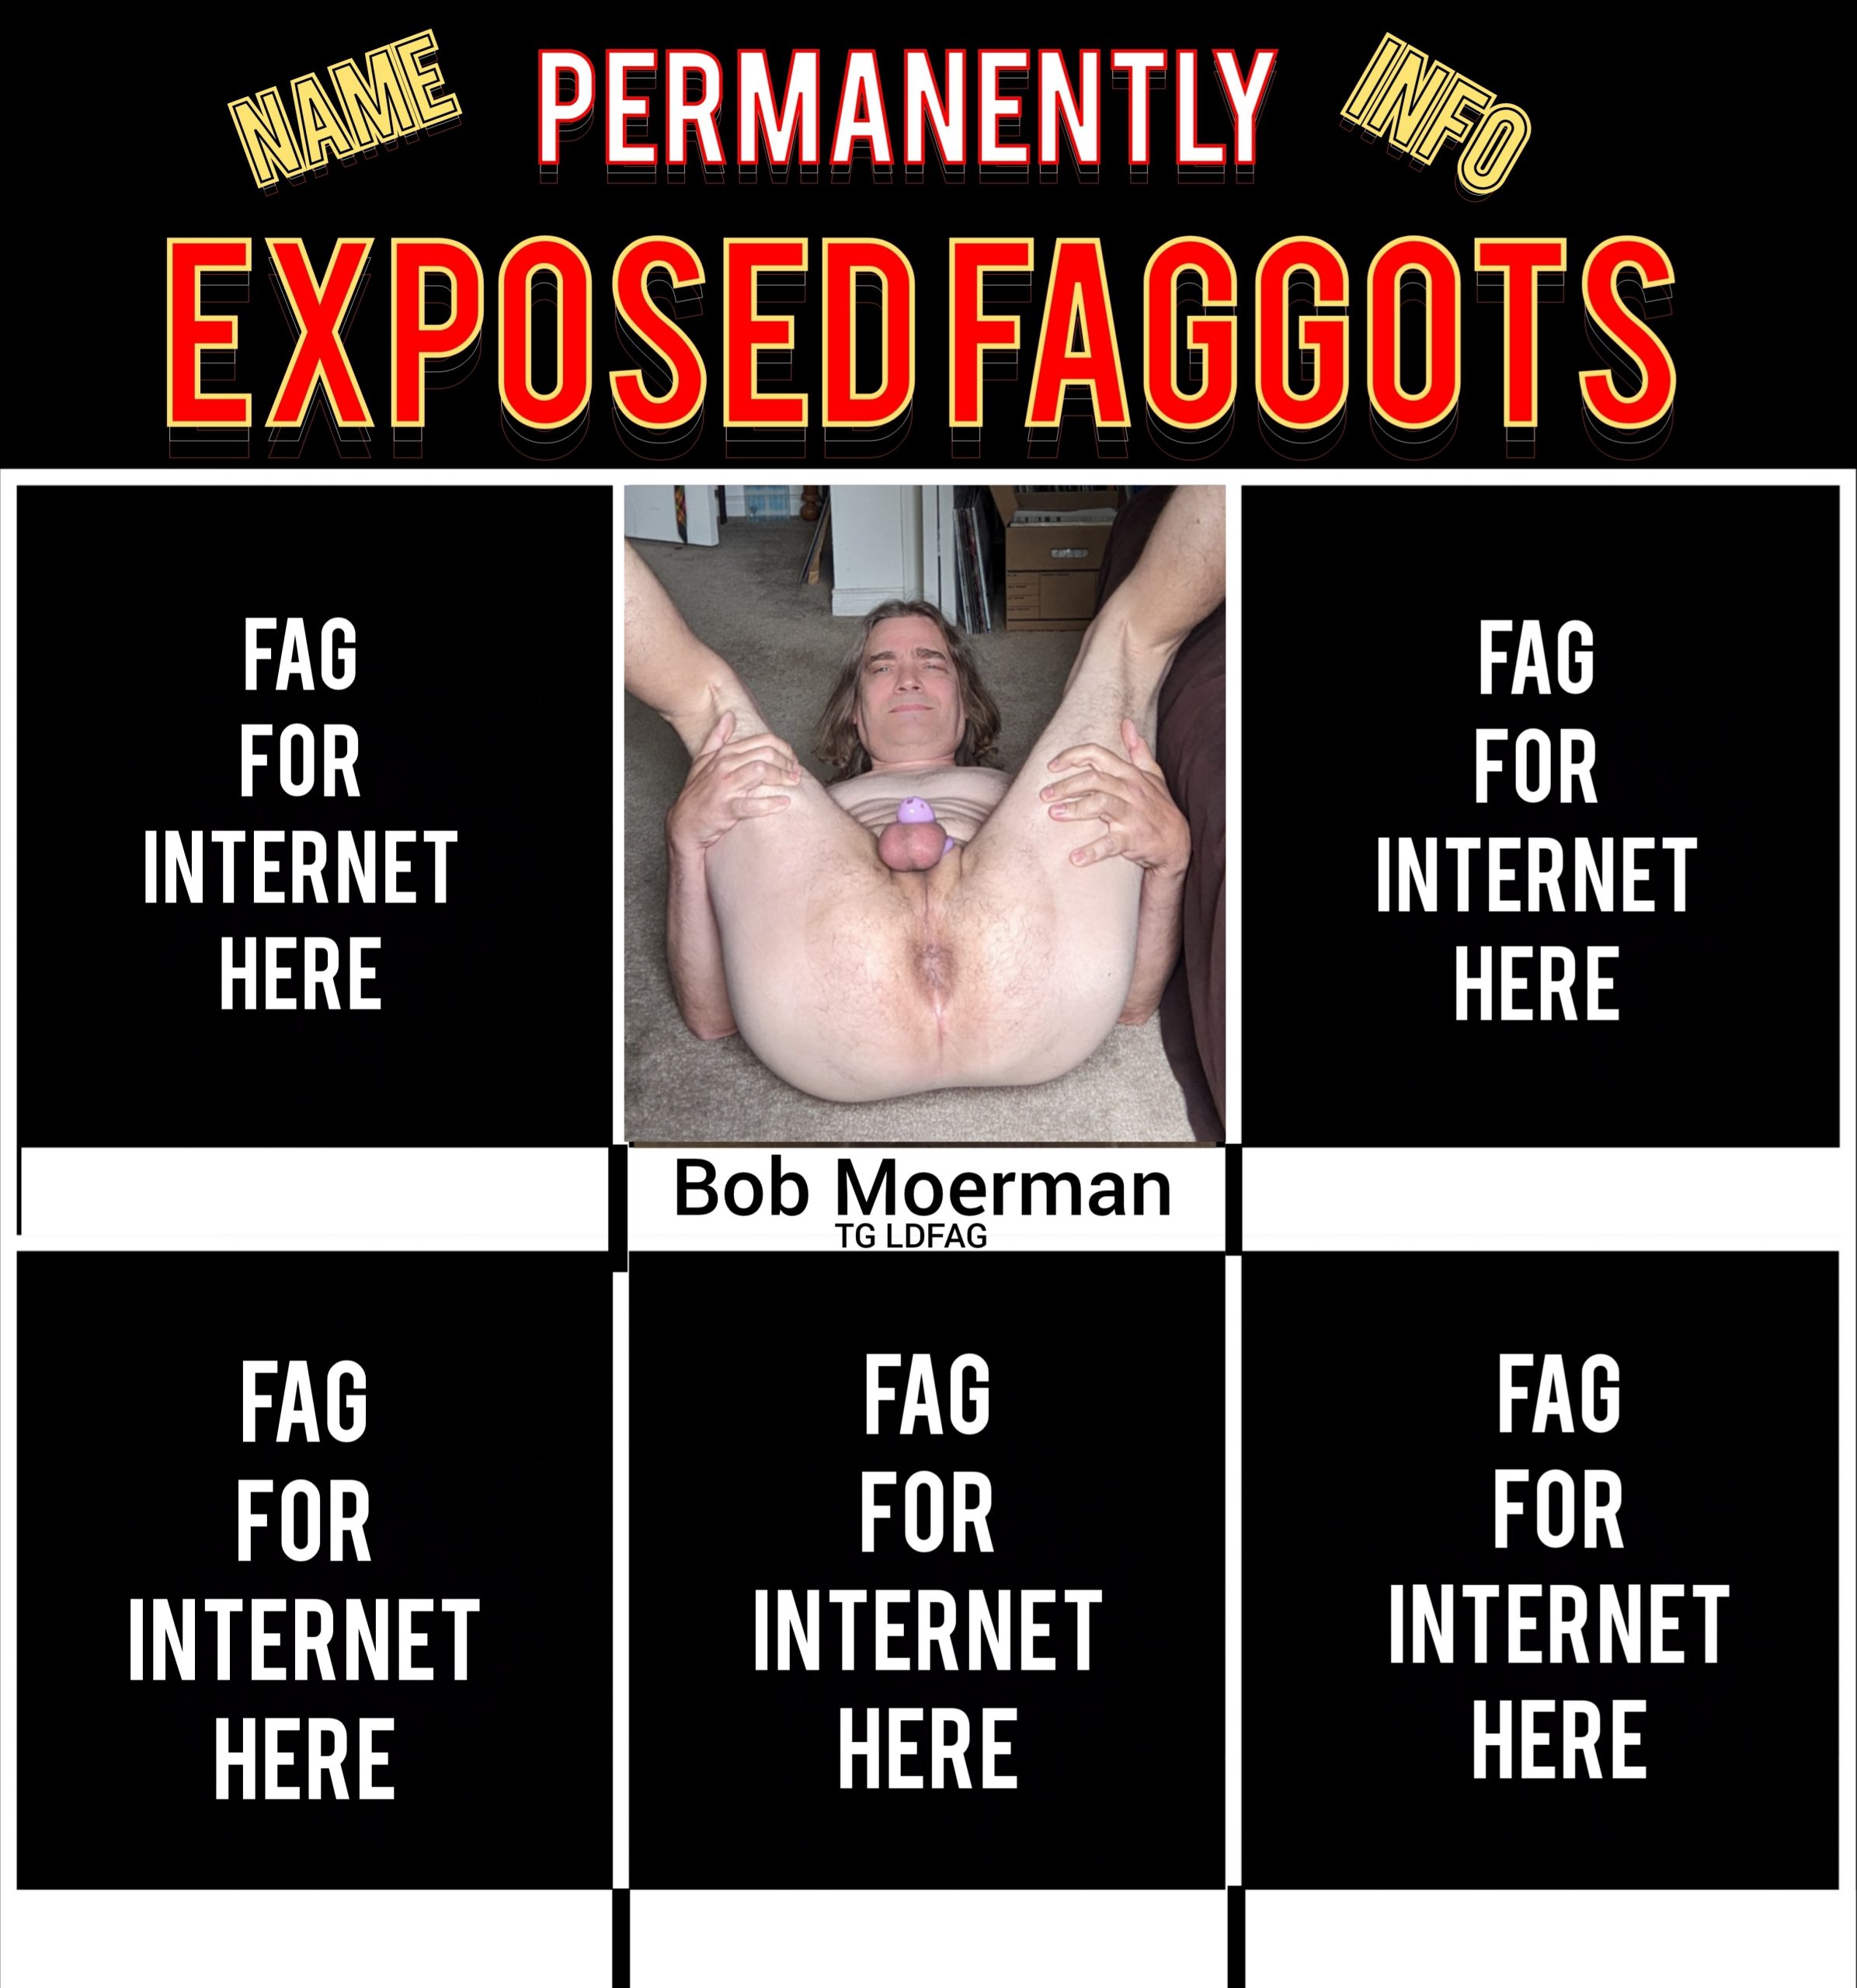 f*ggot Bob Moerman